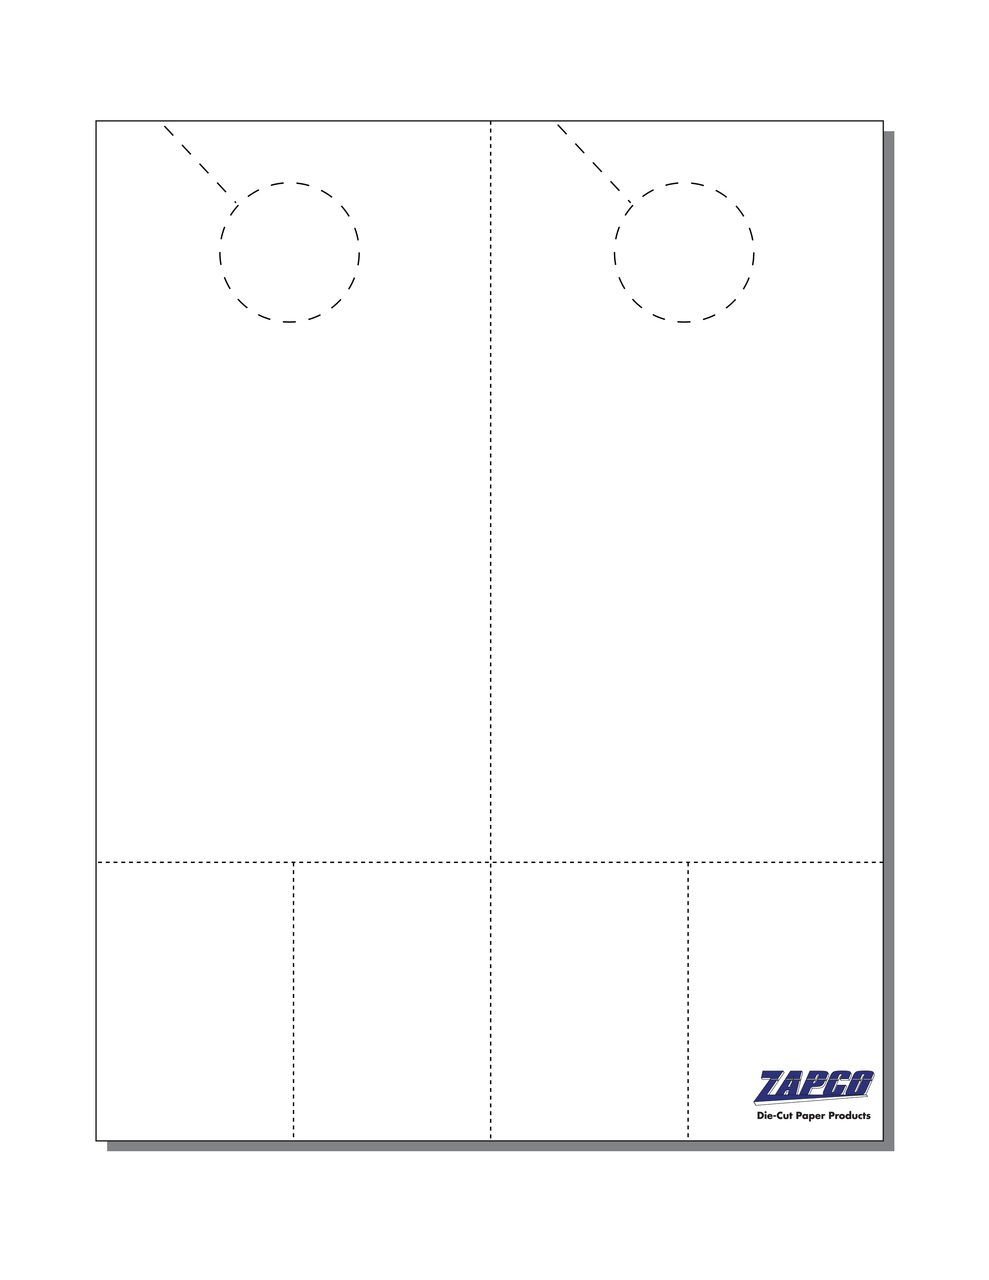 Item 241: 2-up 4 1/4" x 11" Door Hanger with Coupons 8 1/2" x 11" Sheet(250 Sheets)